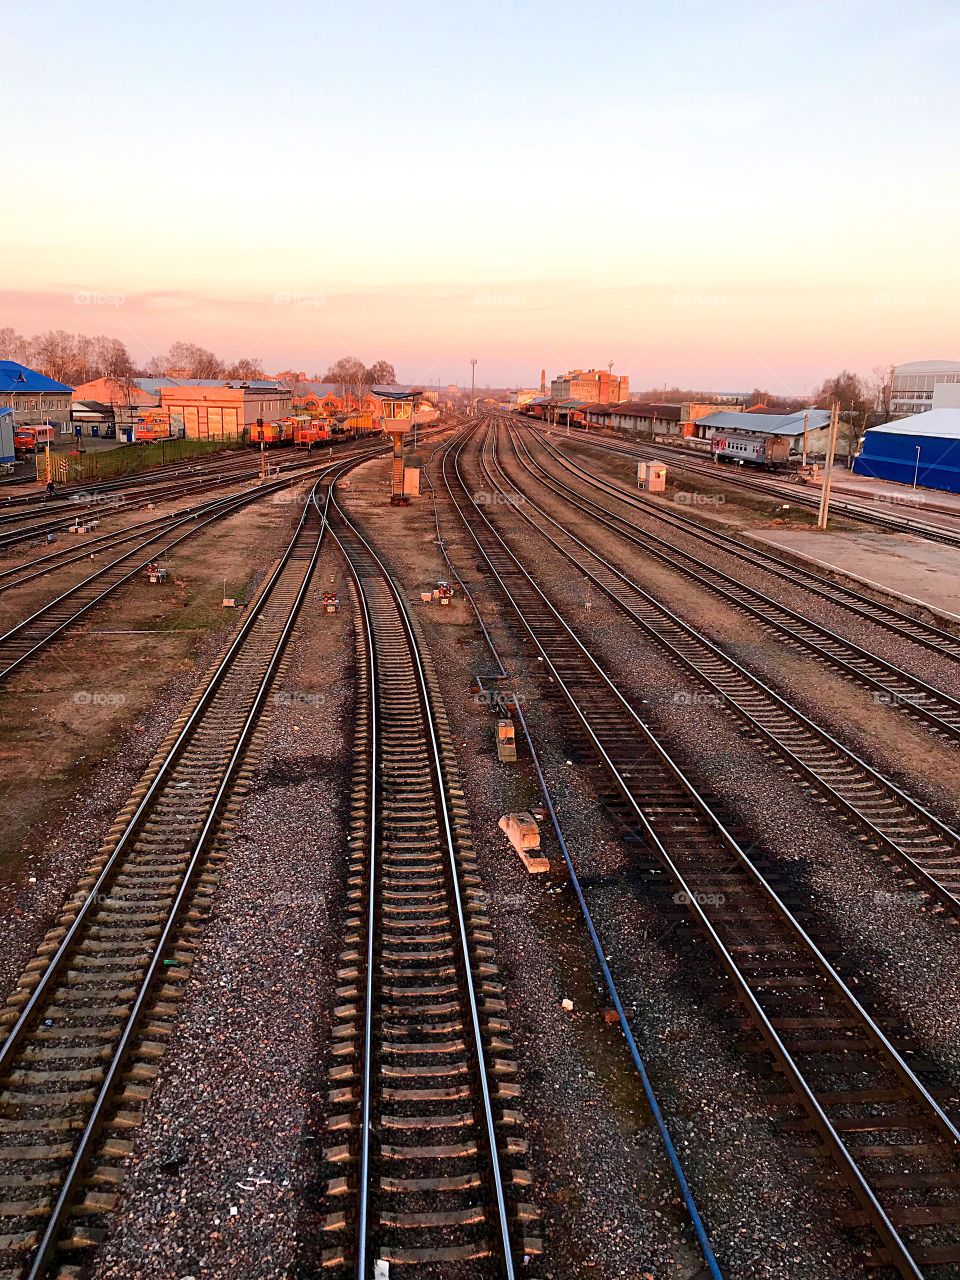 Railway tracks, lit by the evening sun